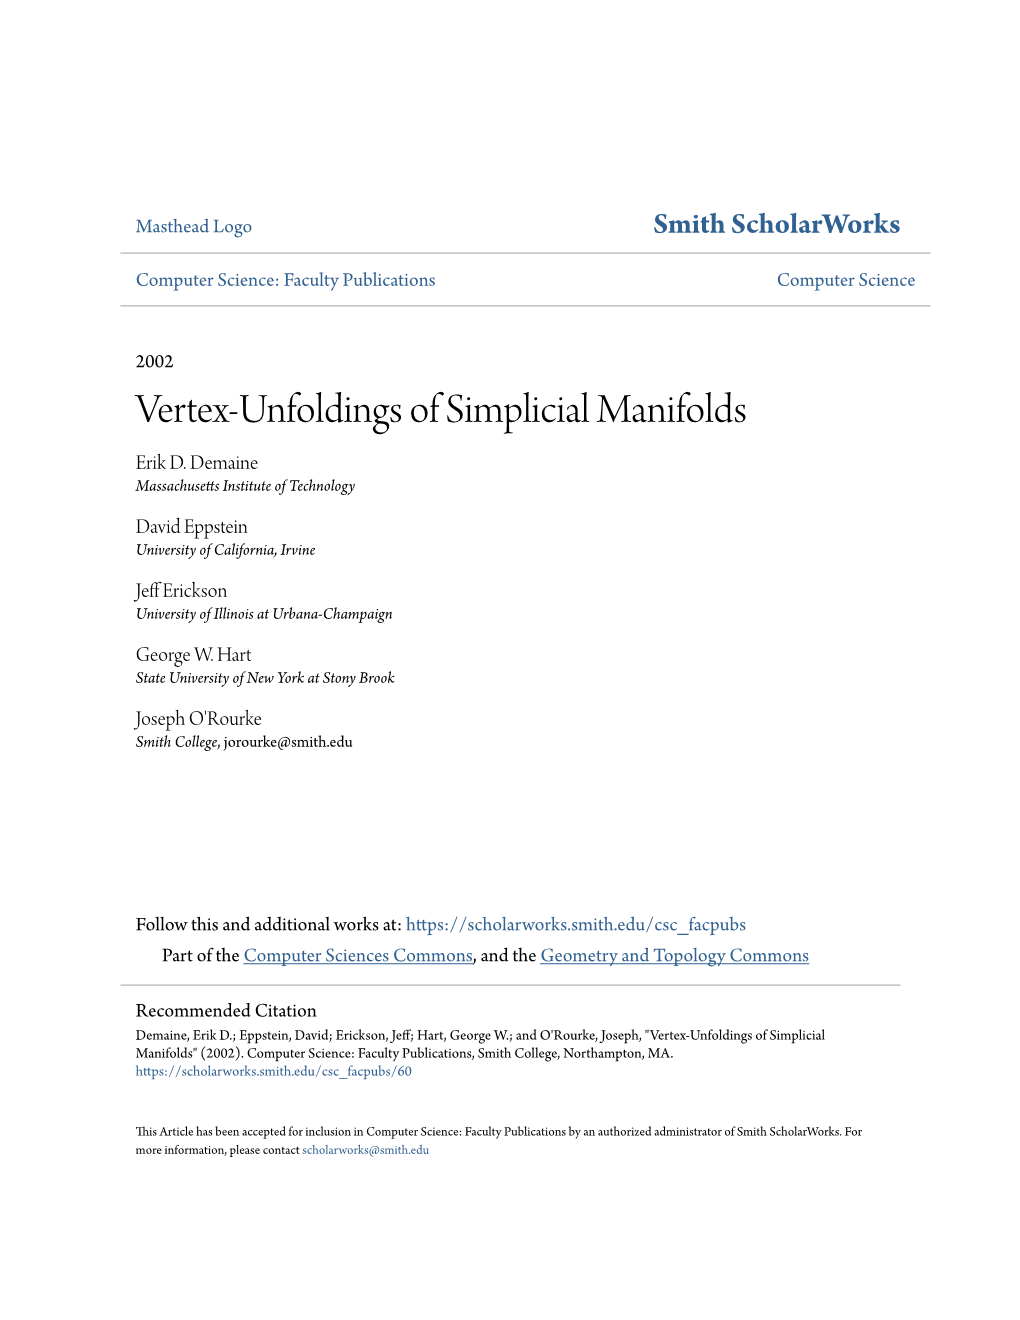 Vertex-Unfoldings of Simplicial Manifolds Erik D